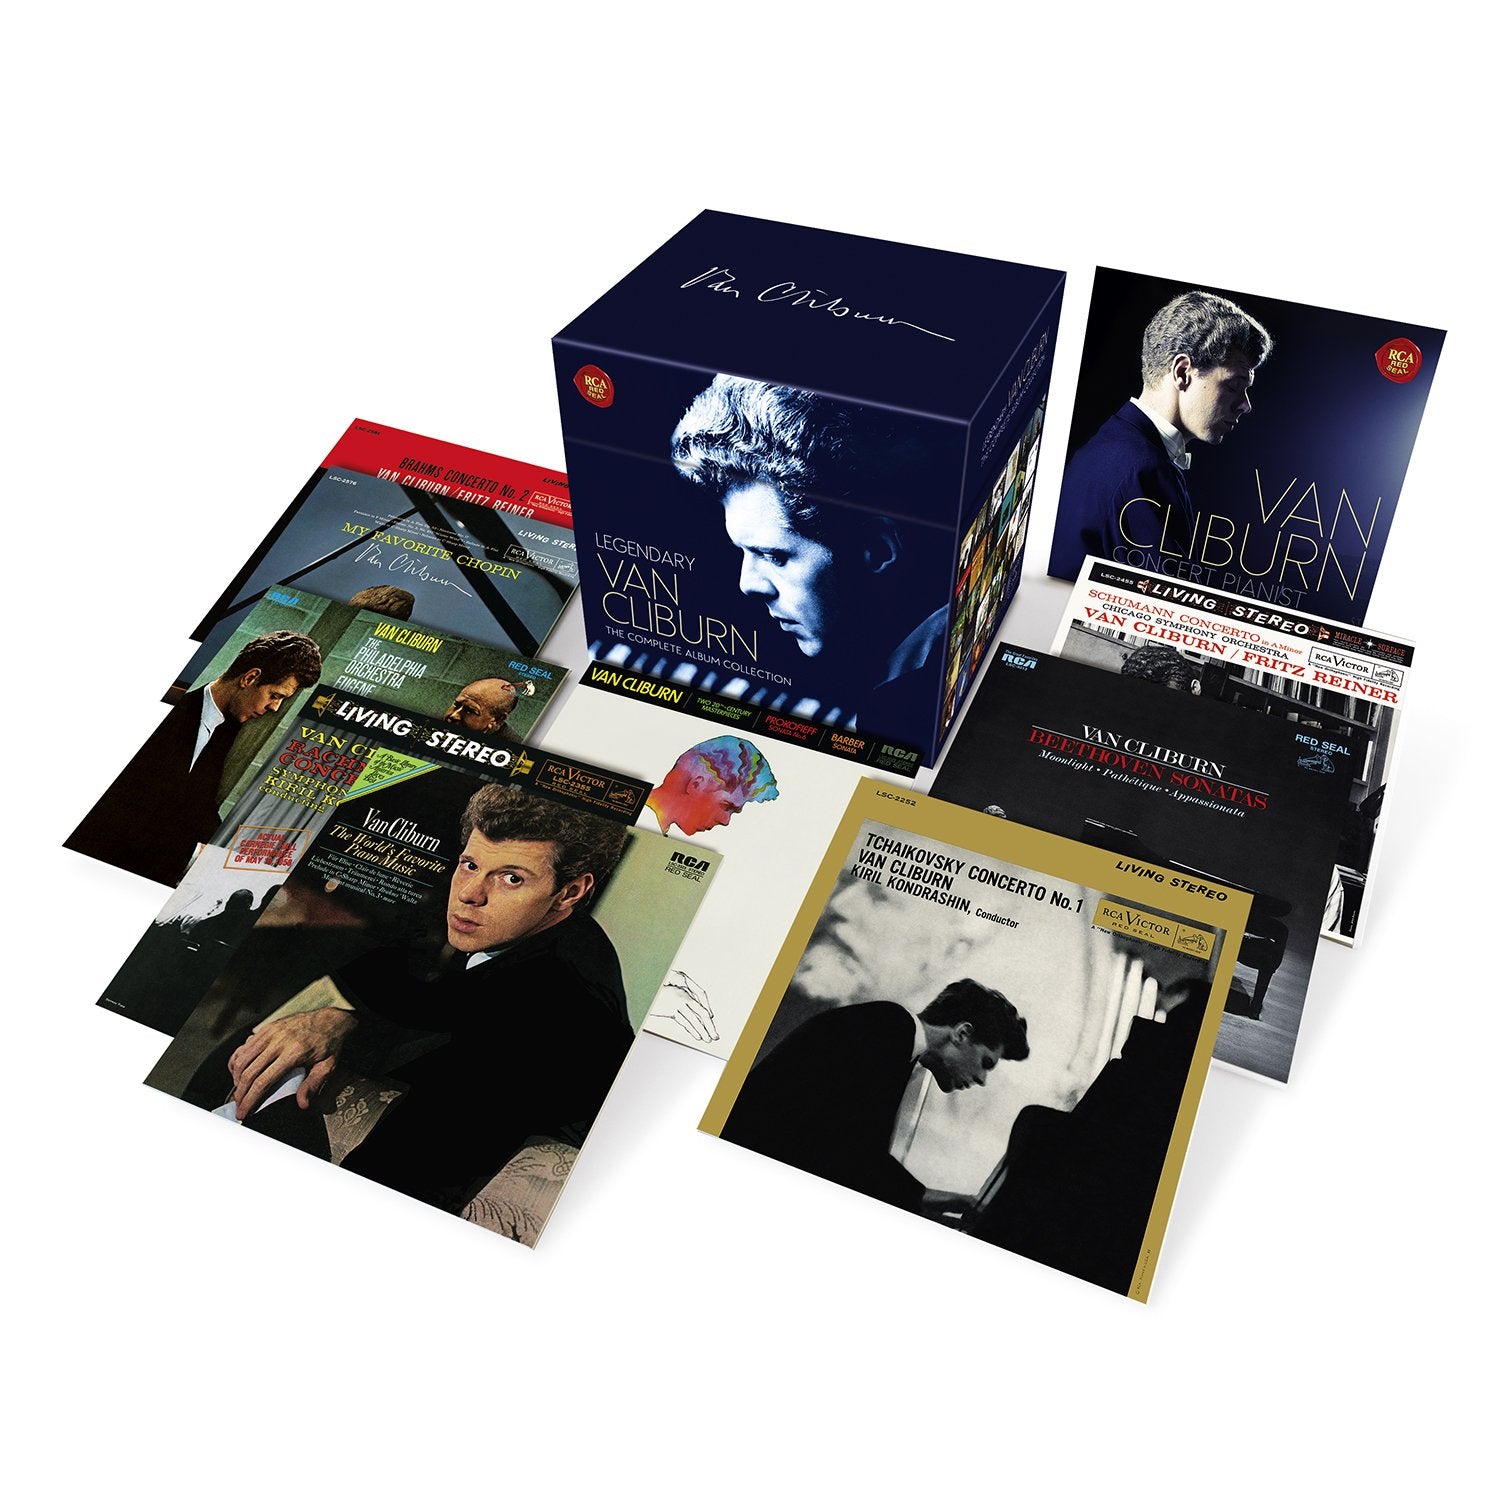 Heifetz : The Complete Album Collection - CD